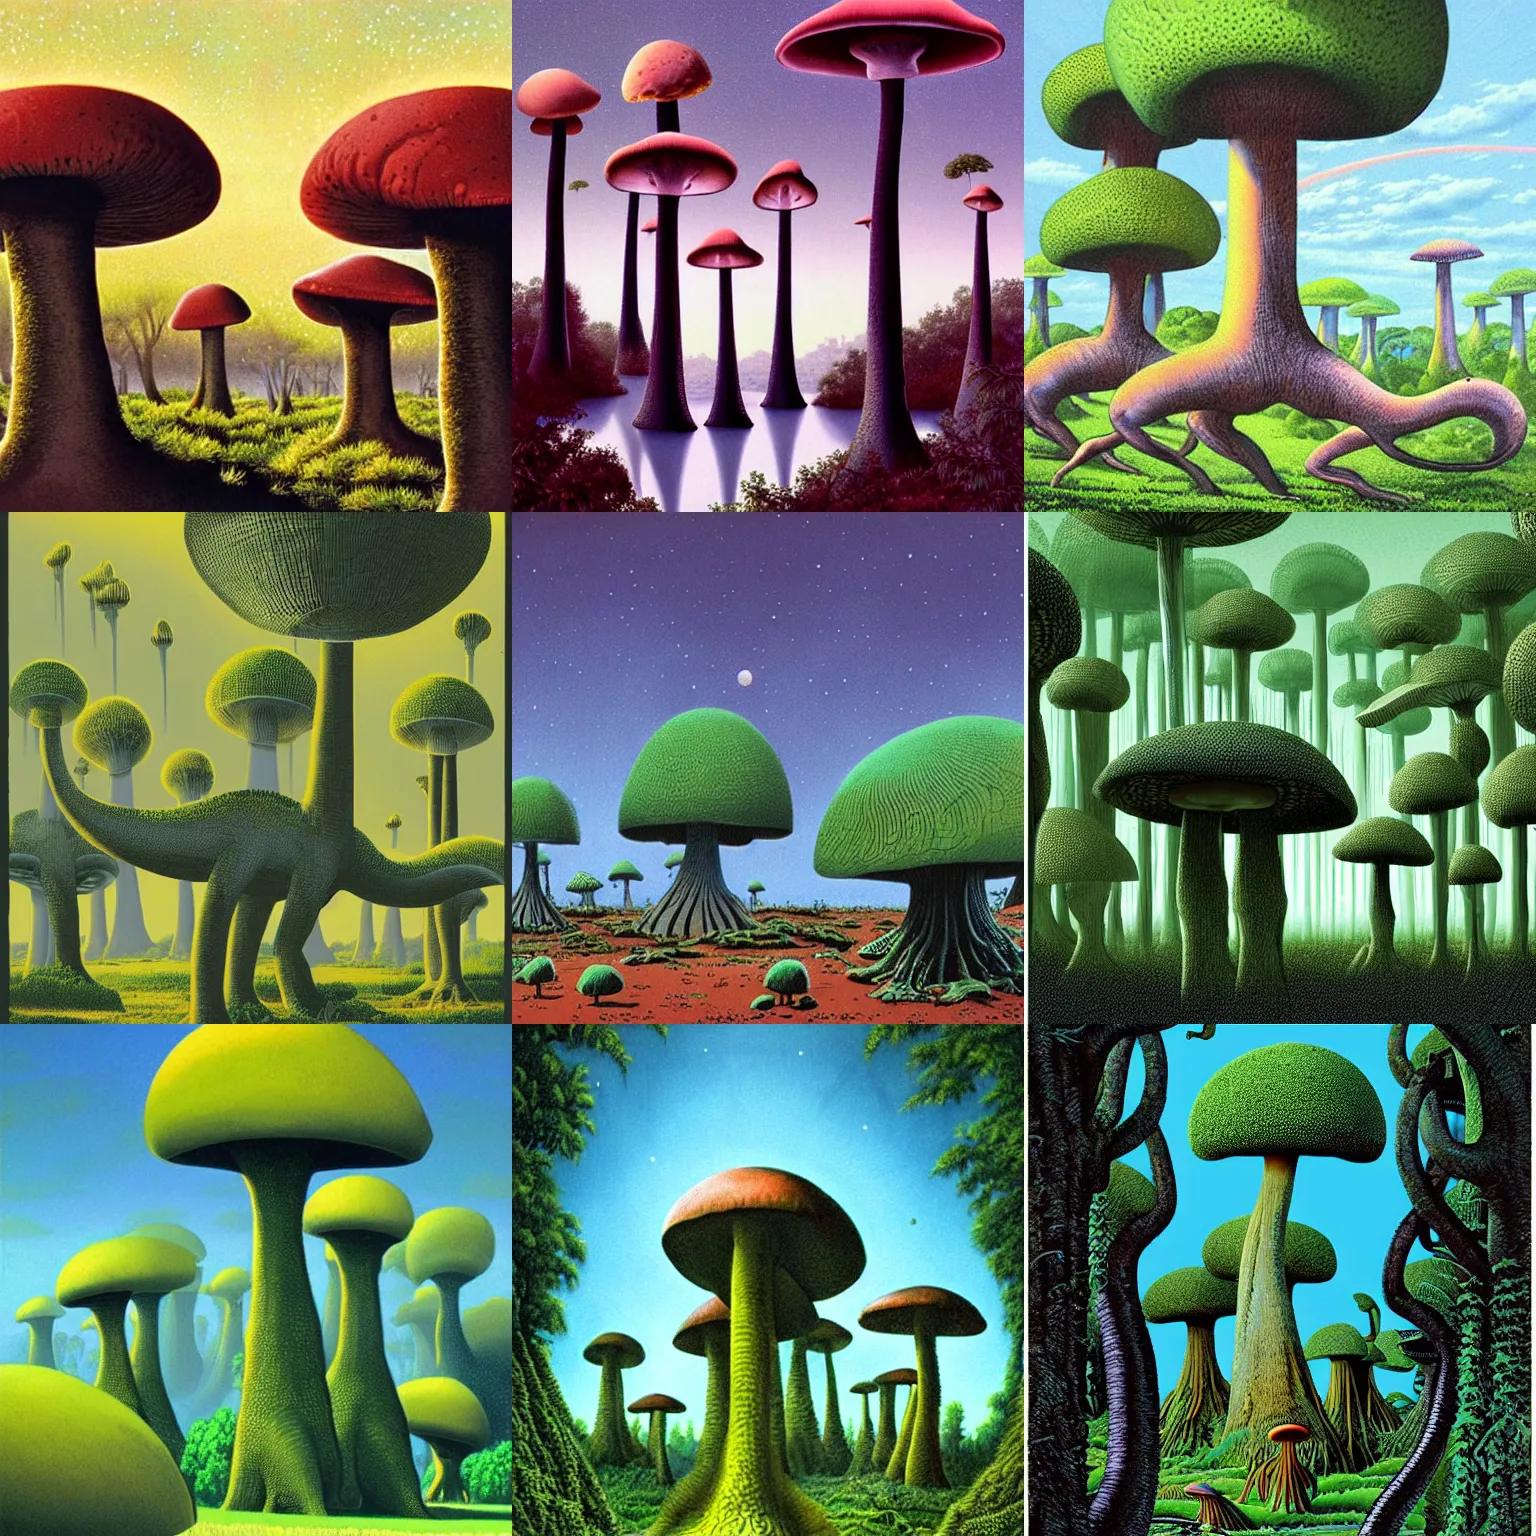 Prompt: illustration by tim white of a alien planet. large mushroom - like trees. giant brontosaurus.